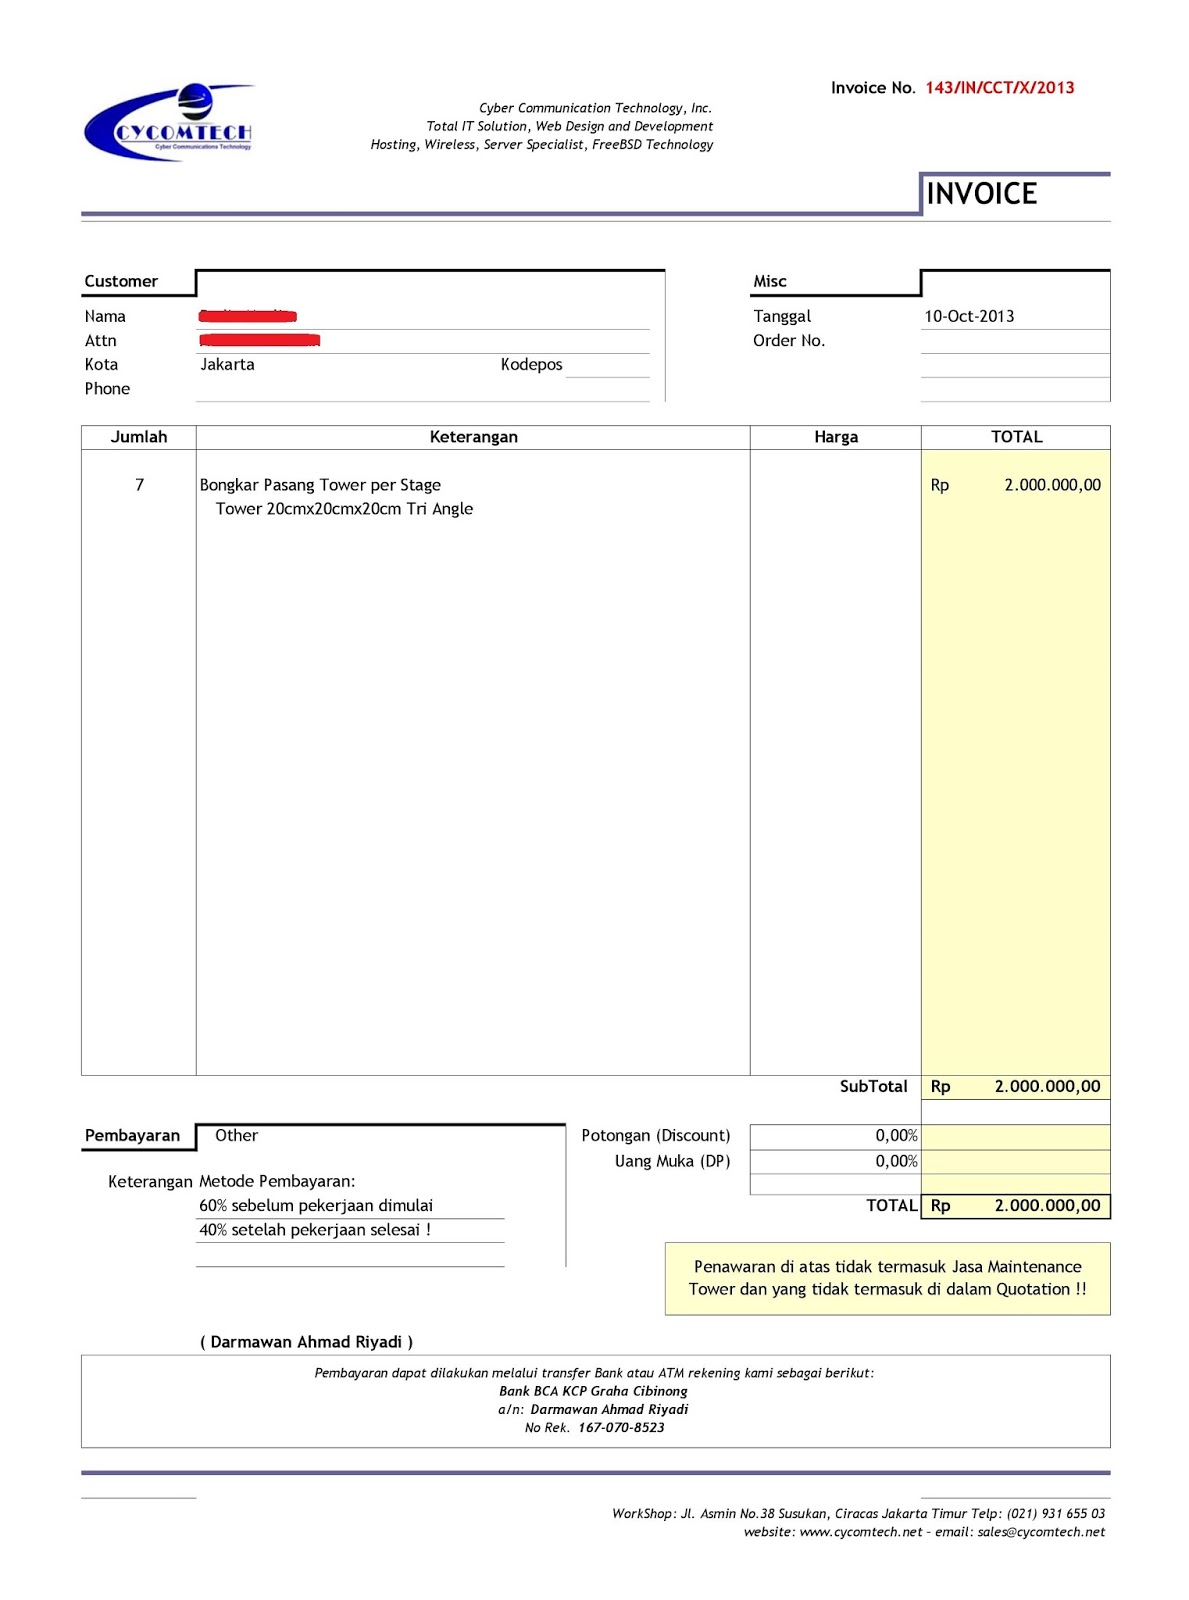 Contoh Format Invoice atau Surat Tagihan - Brankas Arsip